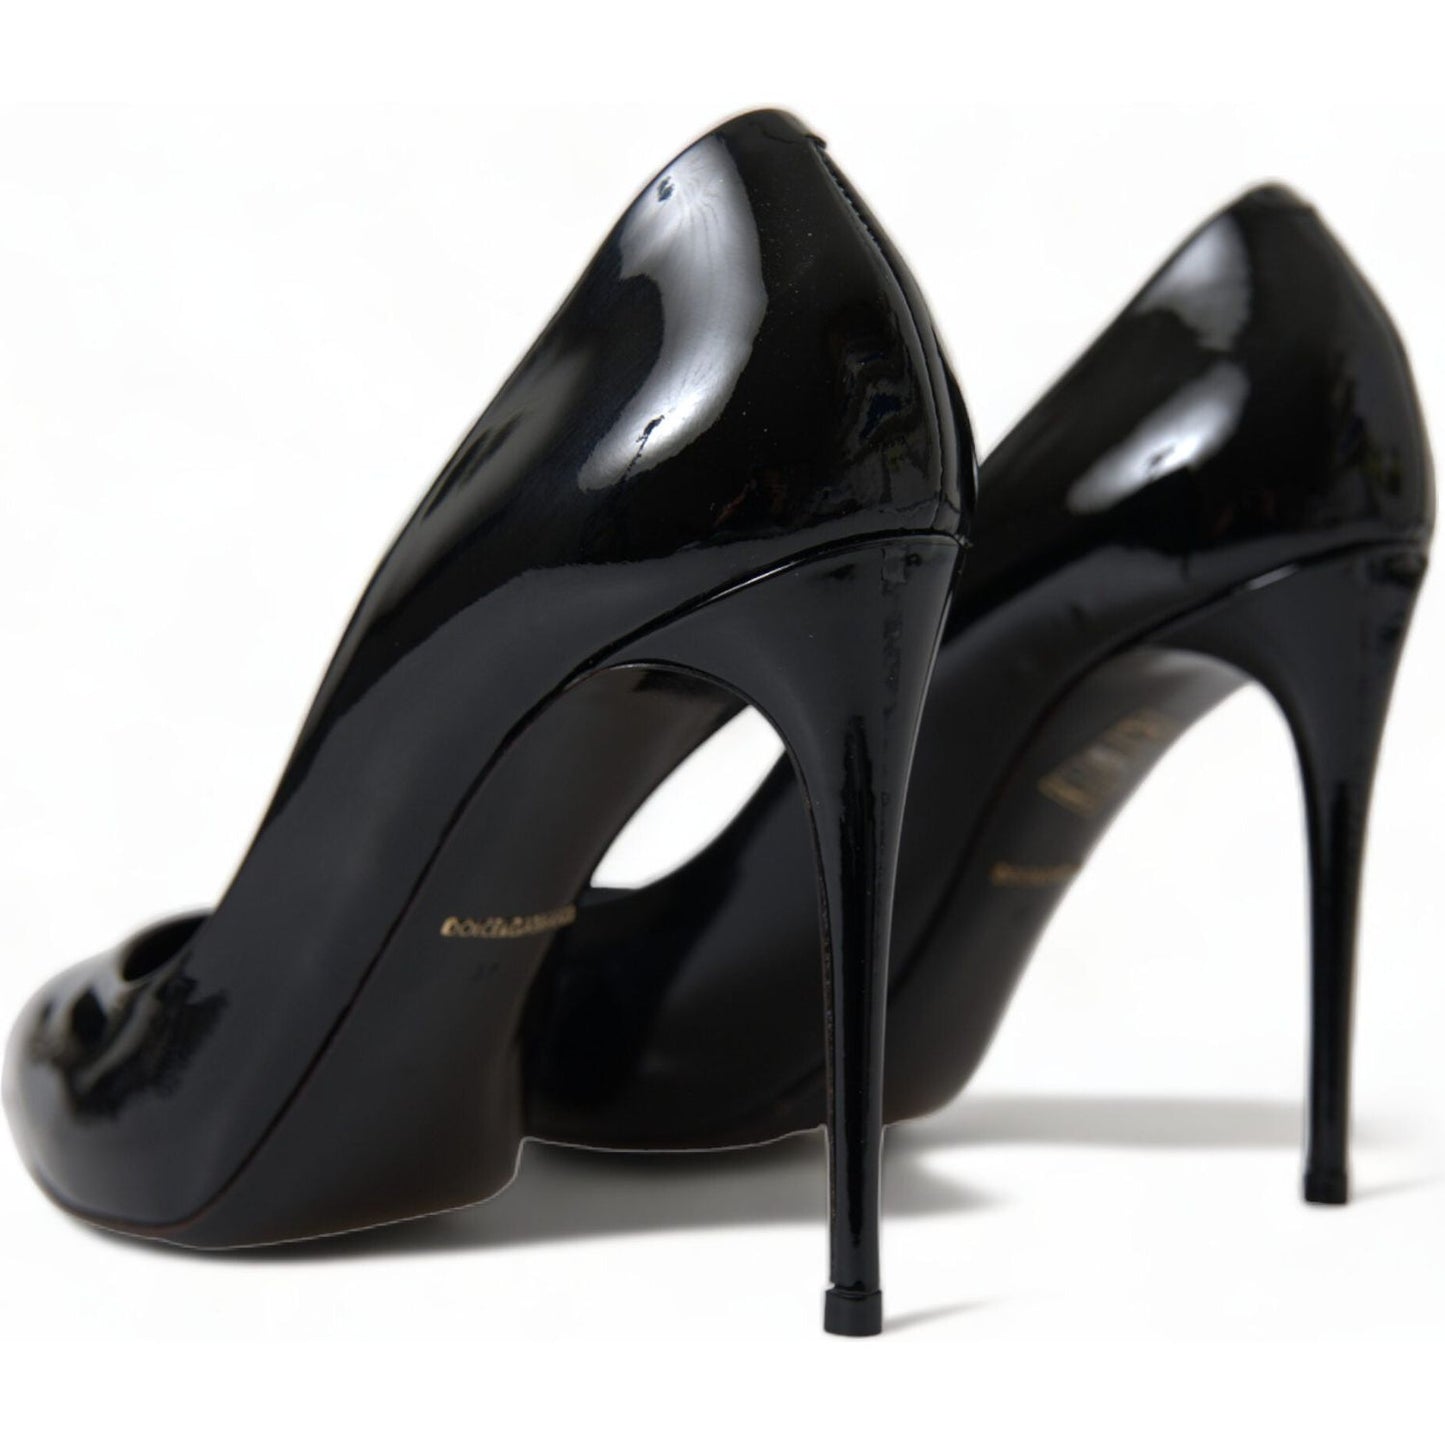 Dolce & Gabbana Elegant Black Patent Stiletto Heels black-patent-leather-pumps-heels-shoes